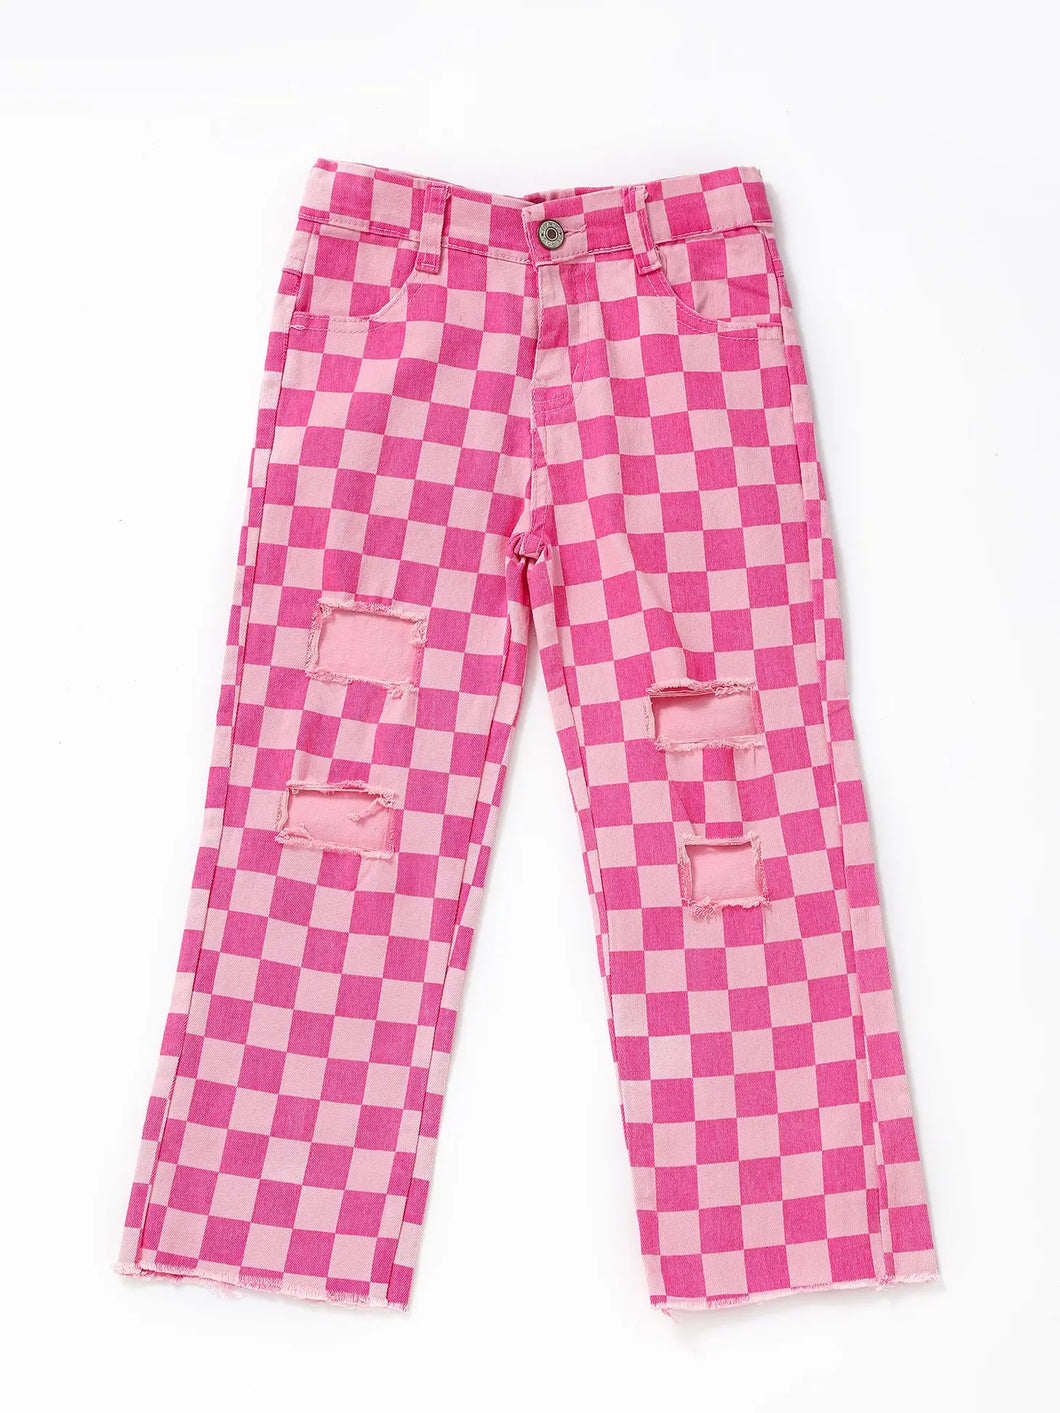 Toddler Pink Checkered Pants